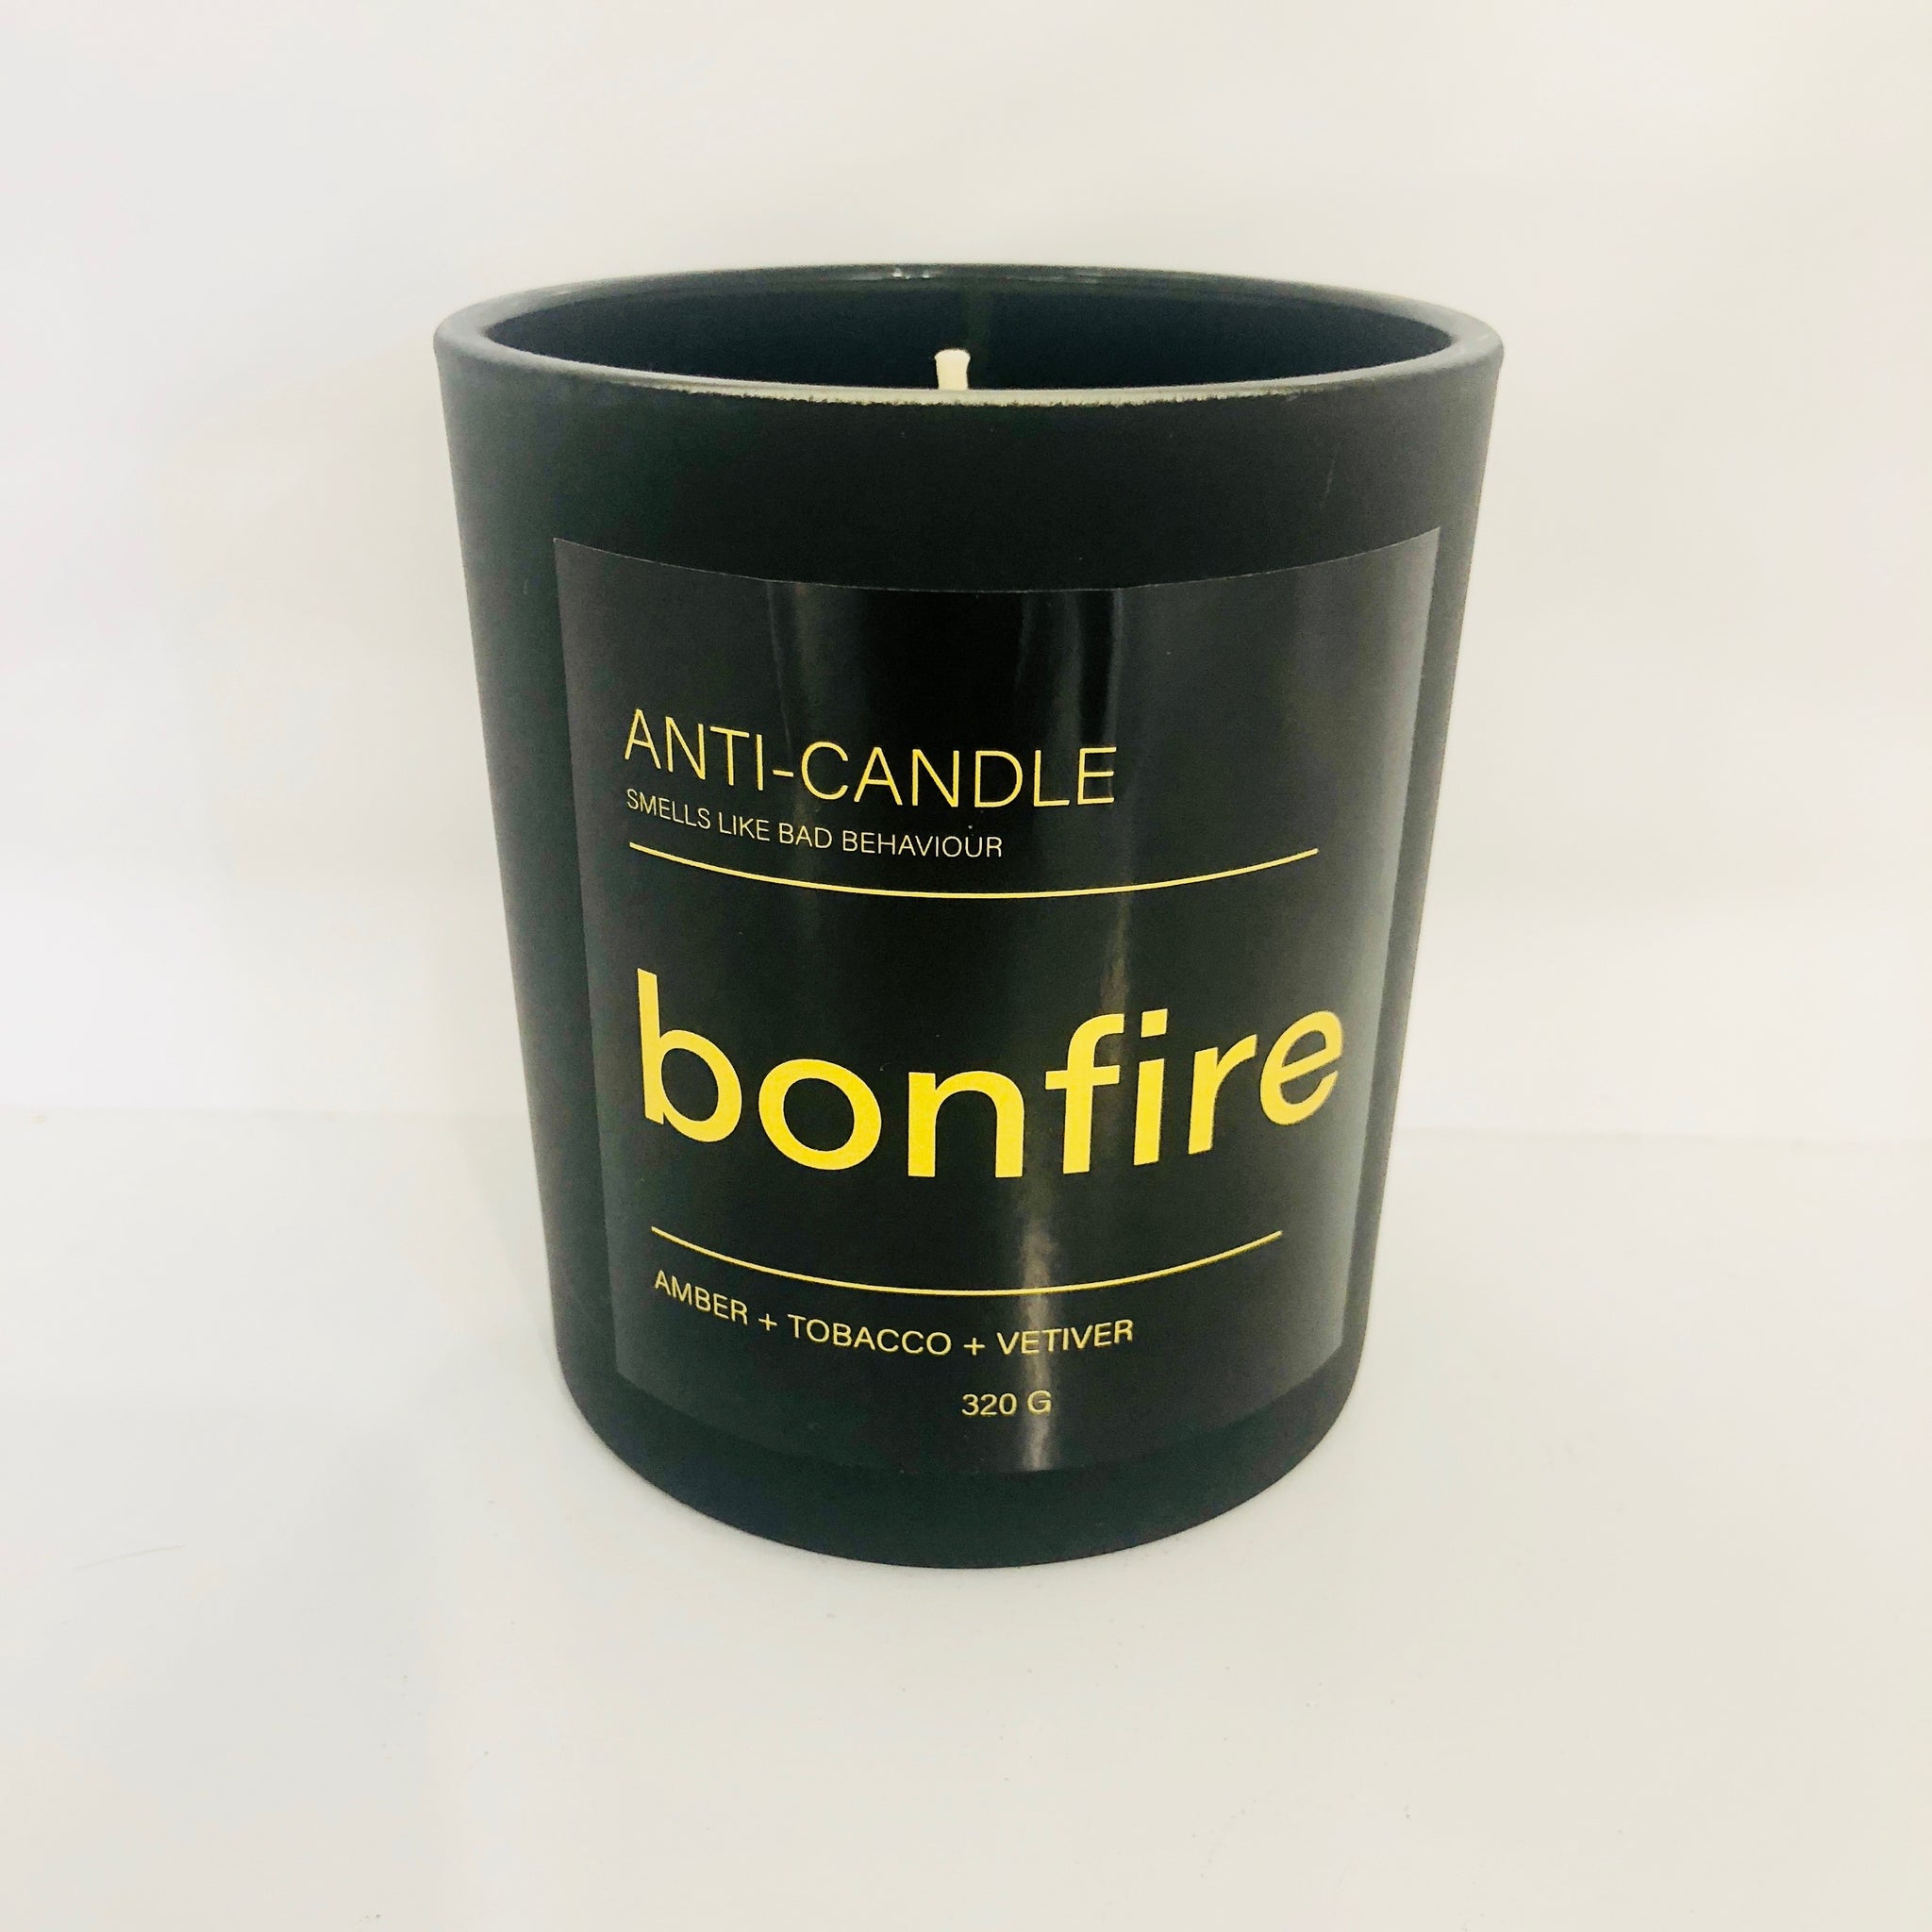 Anti-Candle Bonfire